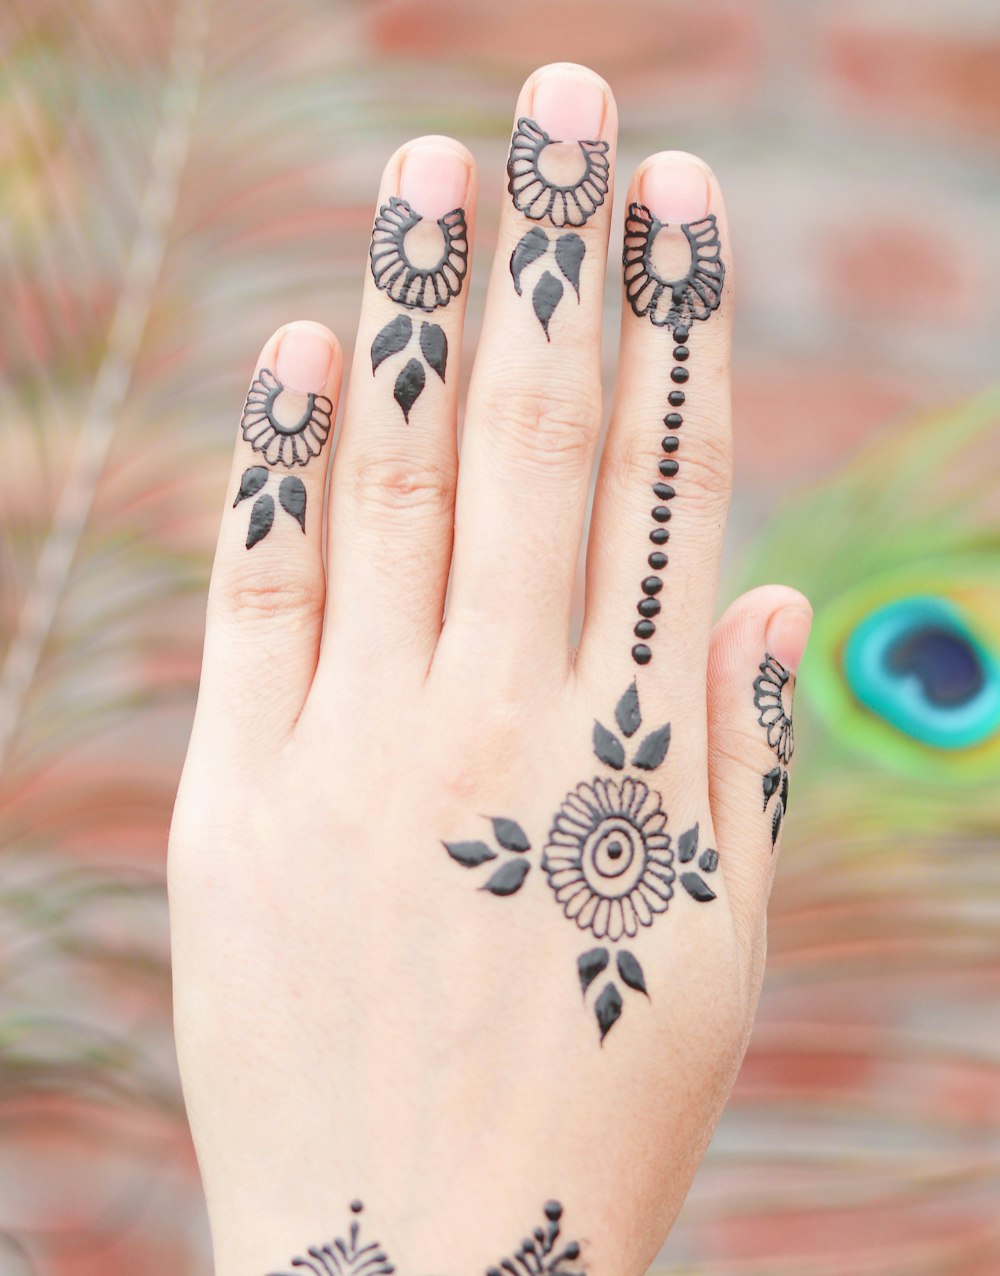 Floral hand tattoo photo – Free Skin Image on Unsplash